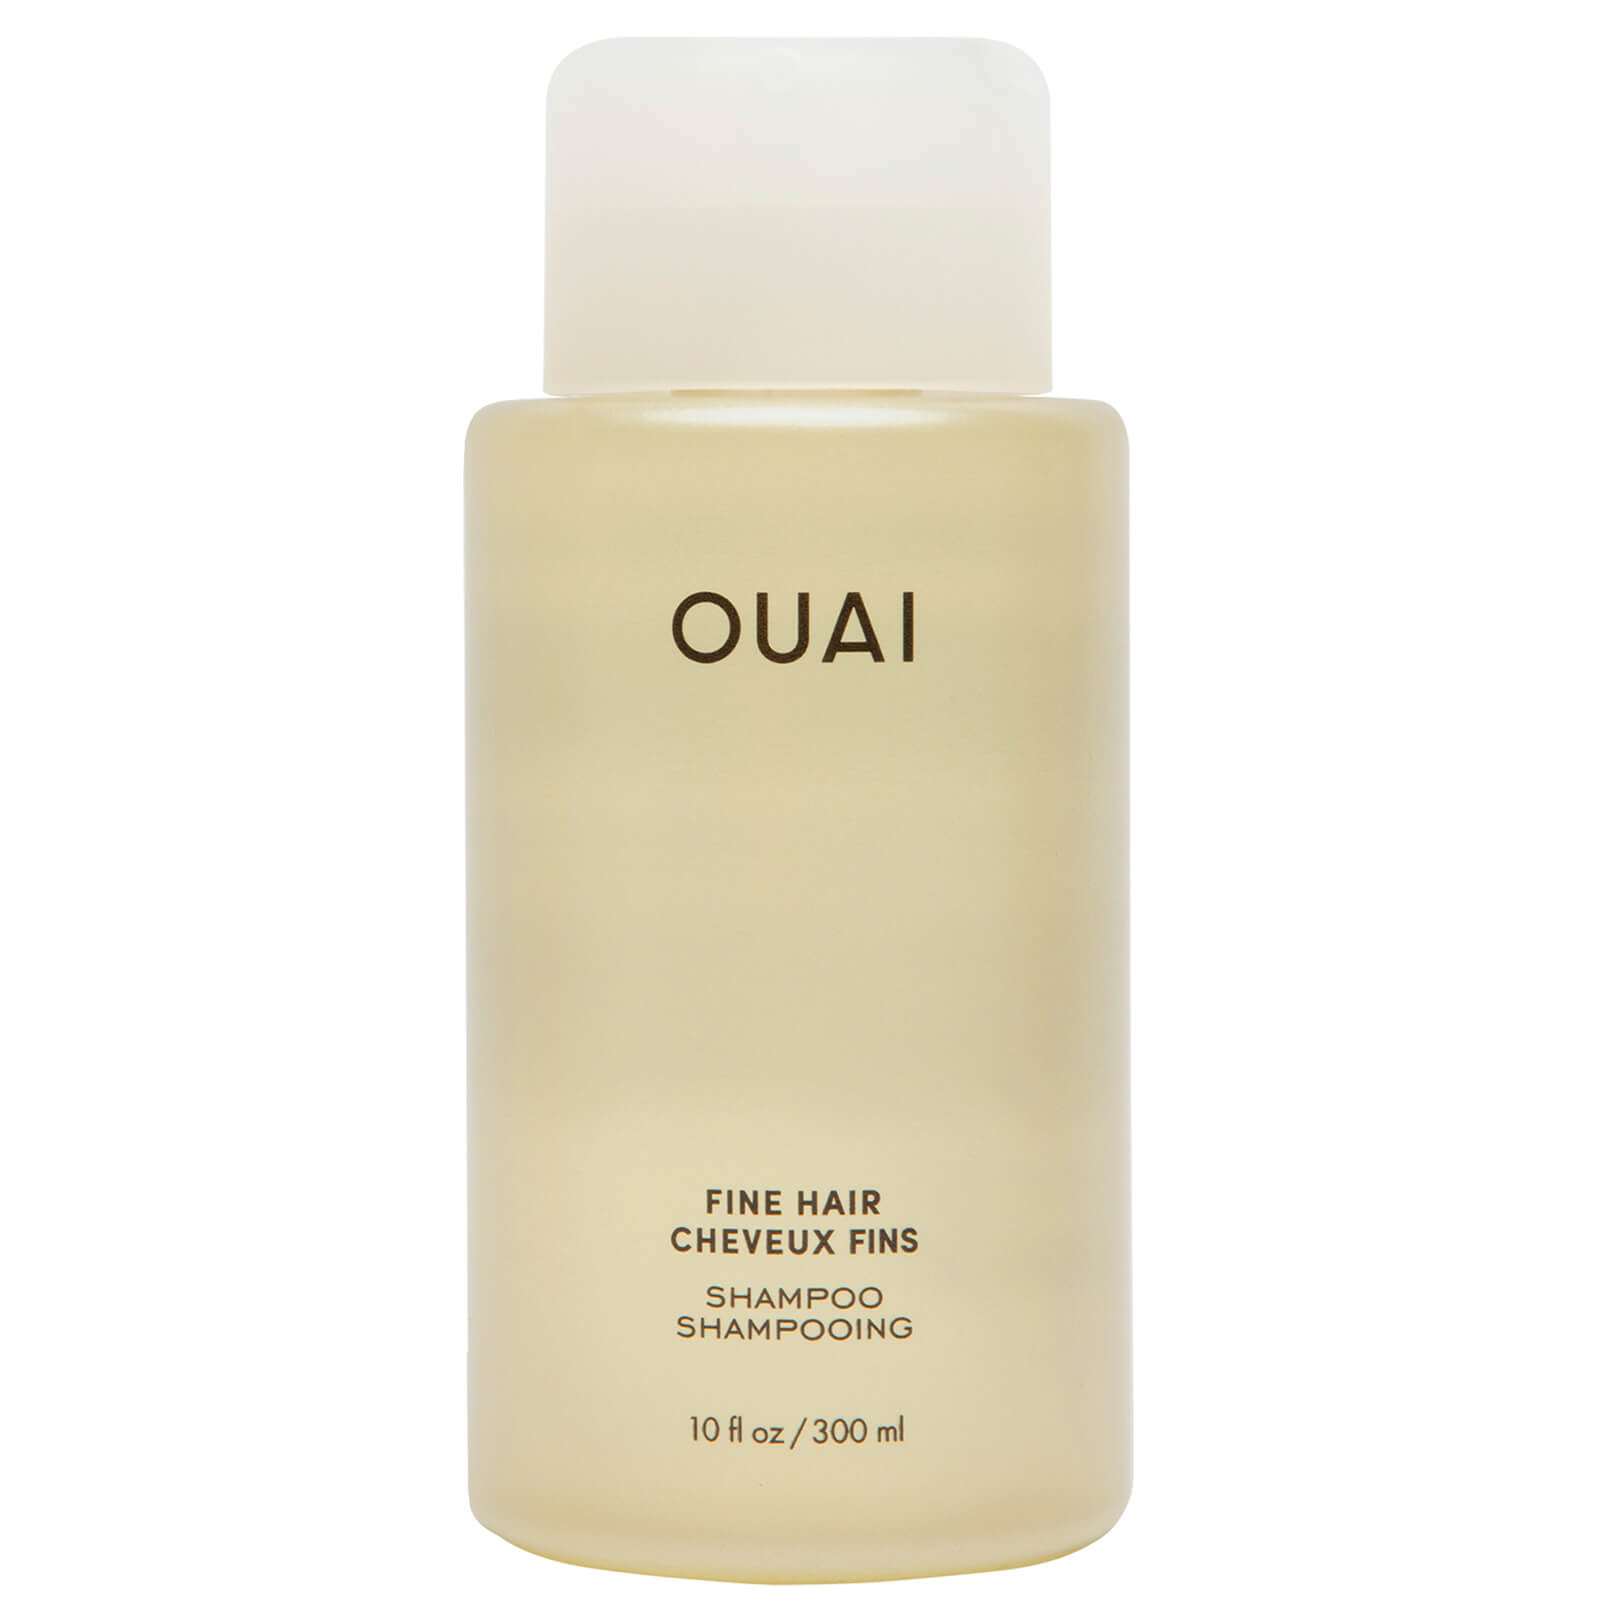 OUAI Fine Hair Shampoo 300ml product